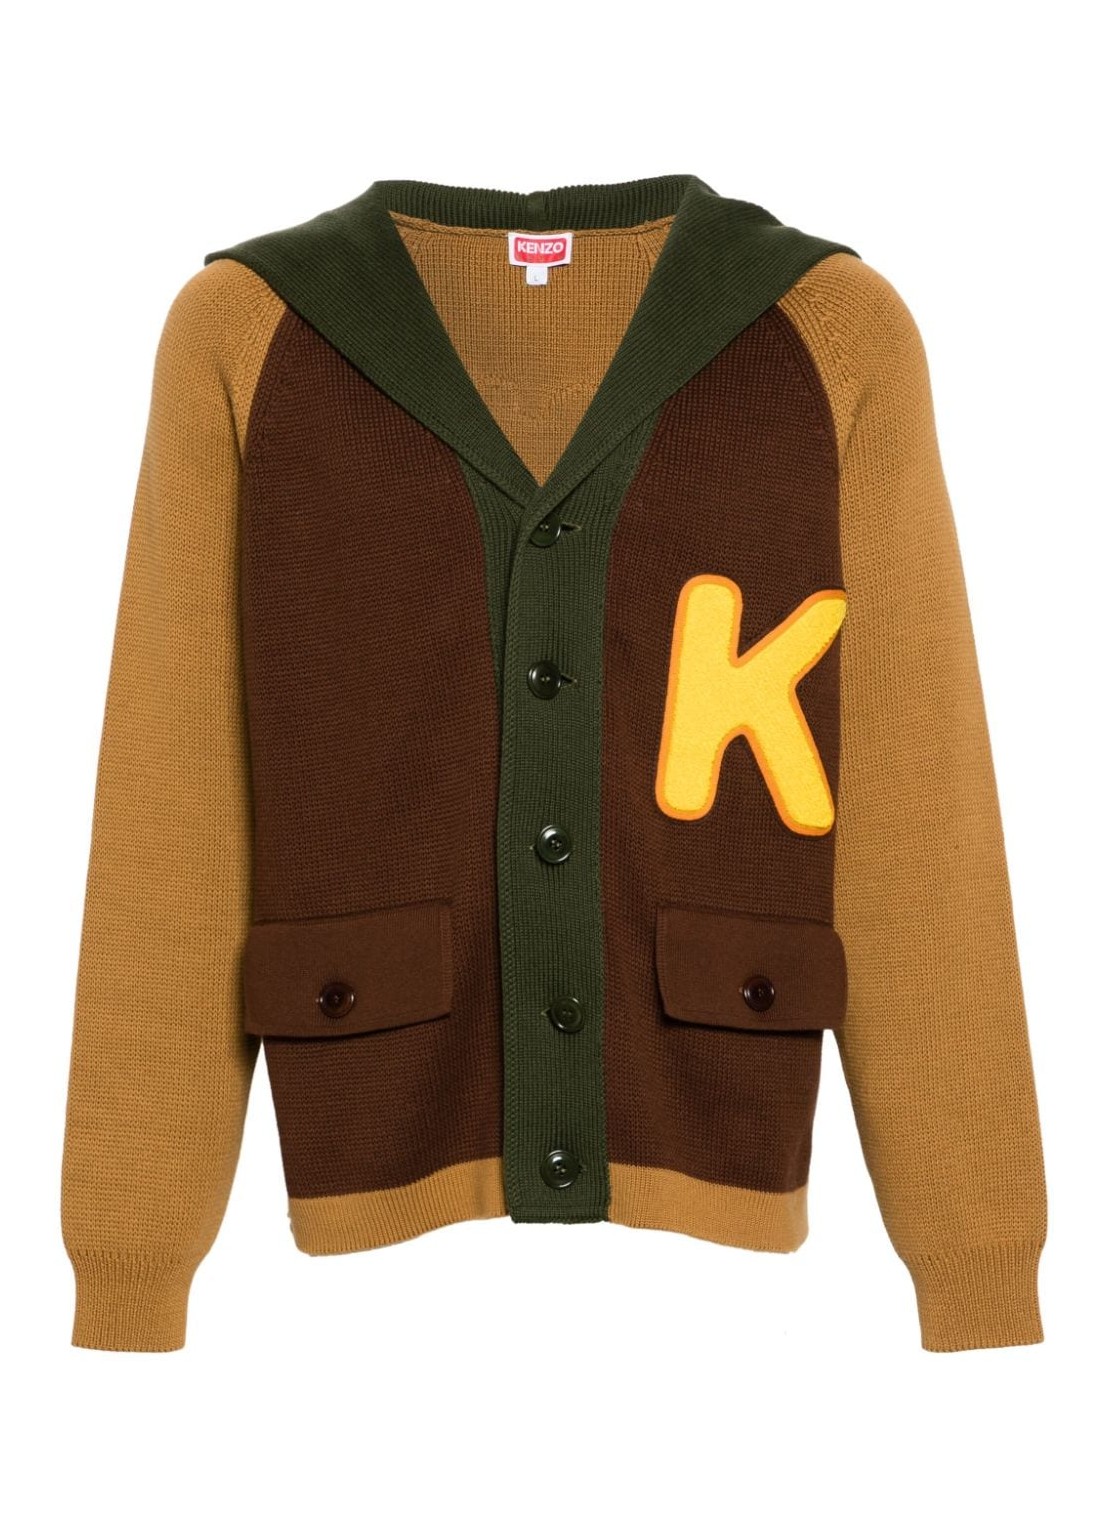 Punto kenzo knitwear man colorblock cardigan fe55ca4383bi 14 talla S
 